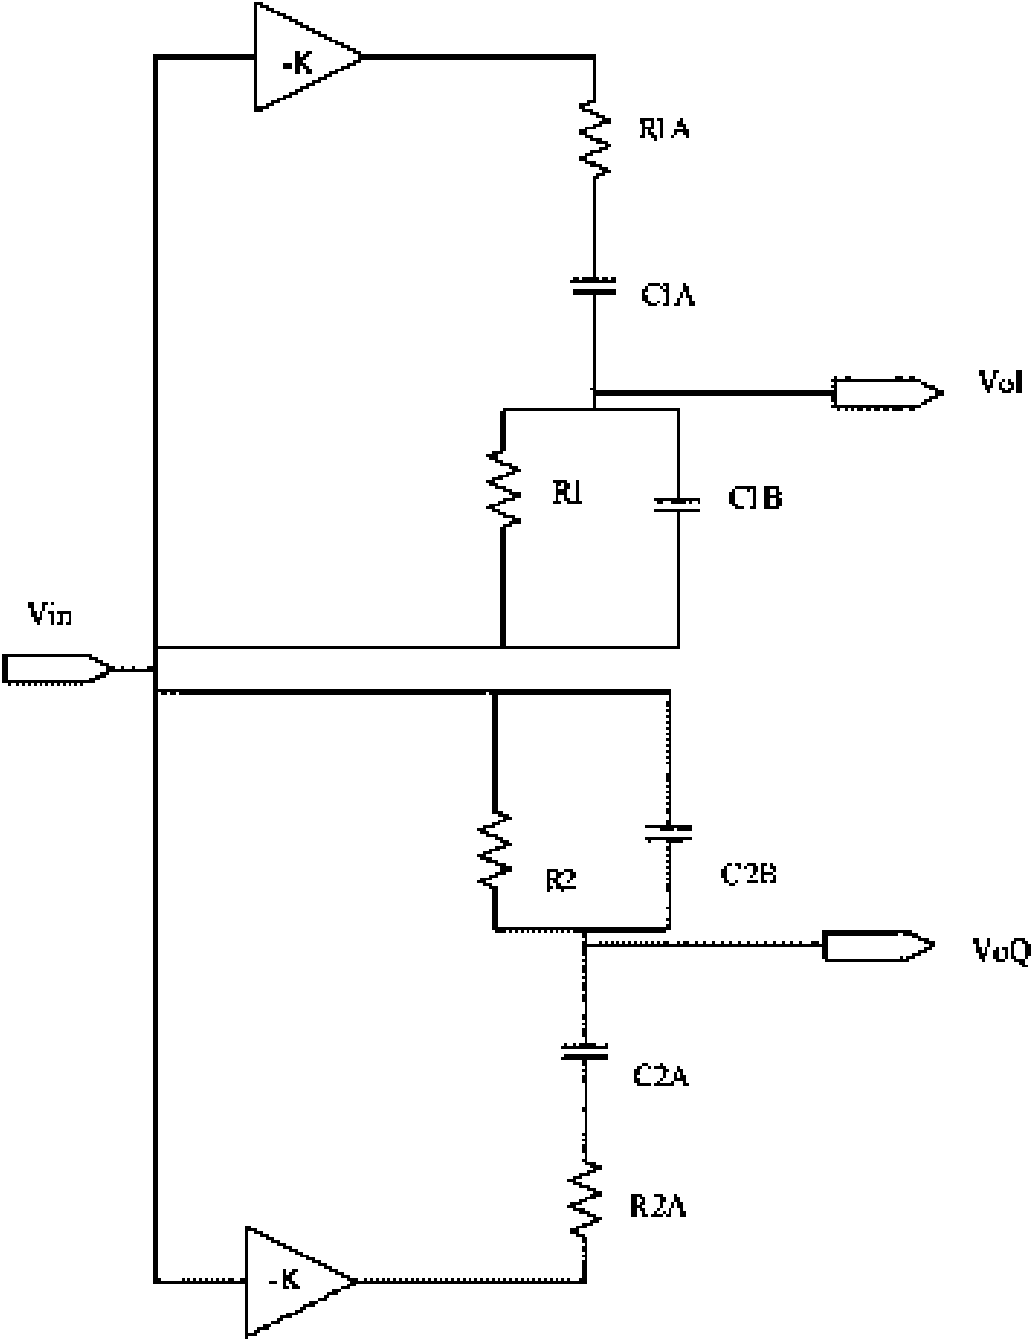 NMOS transistor based 90-degree phase shifter